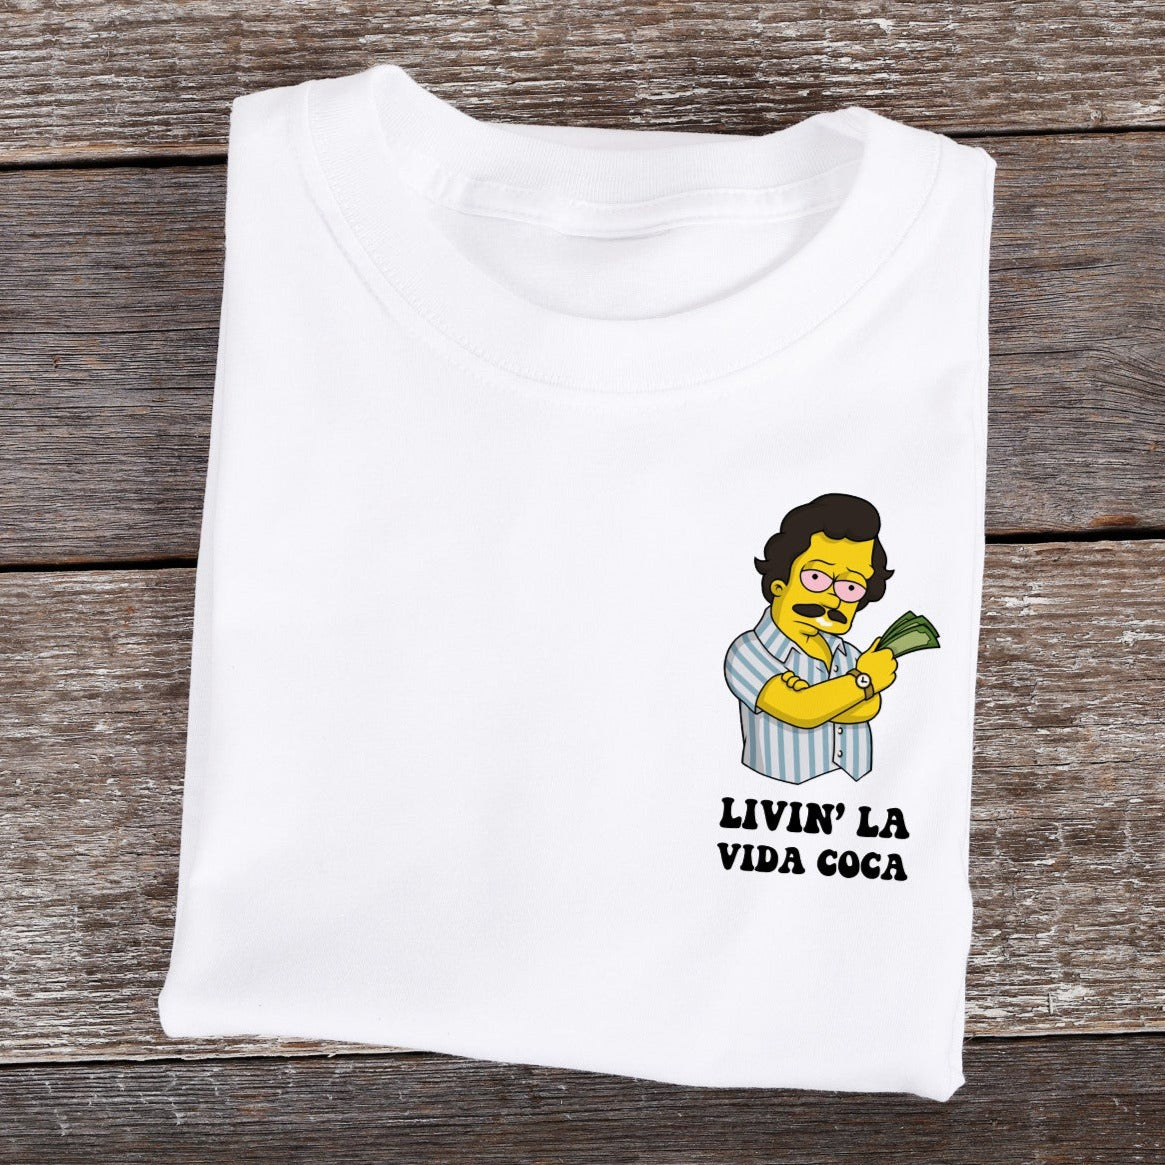 LA VIDA COCA - Tshirt